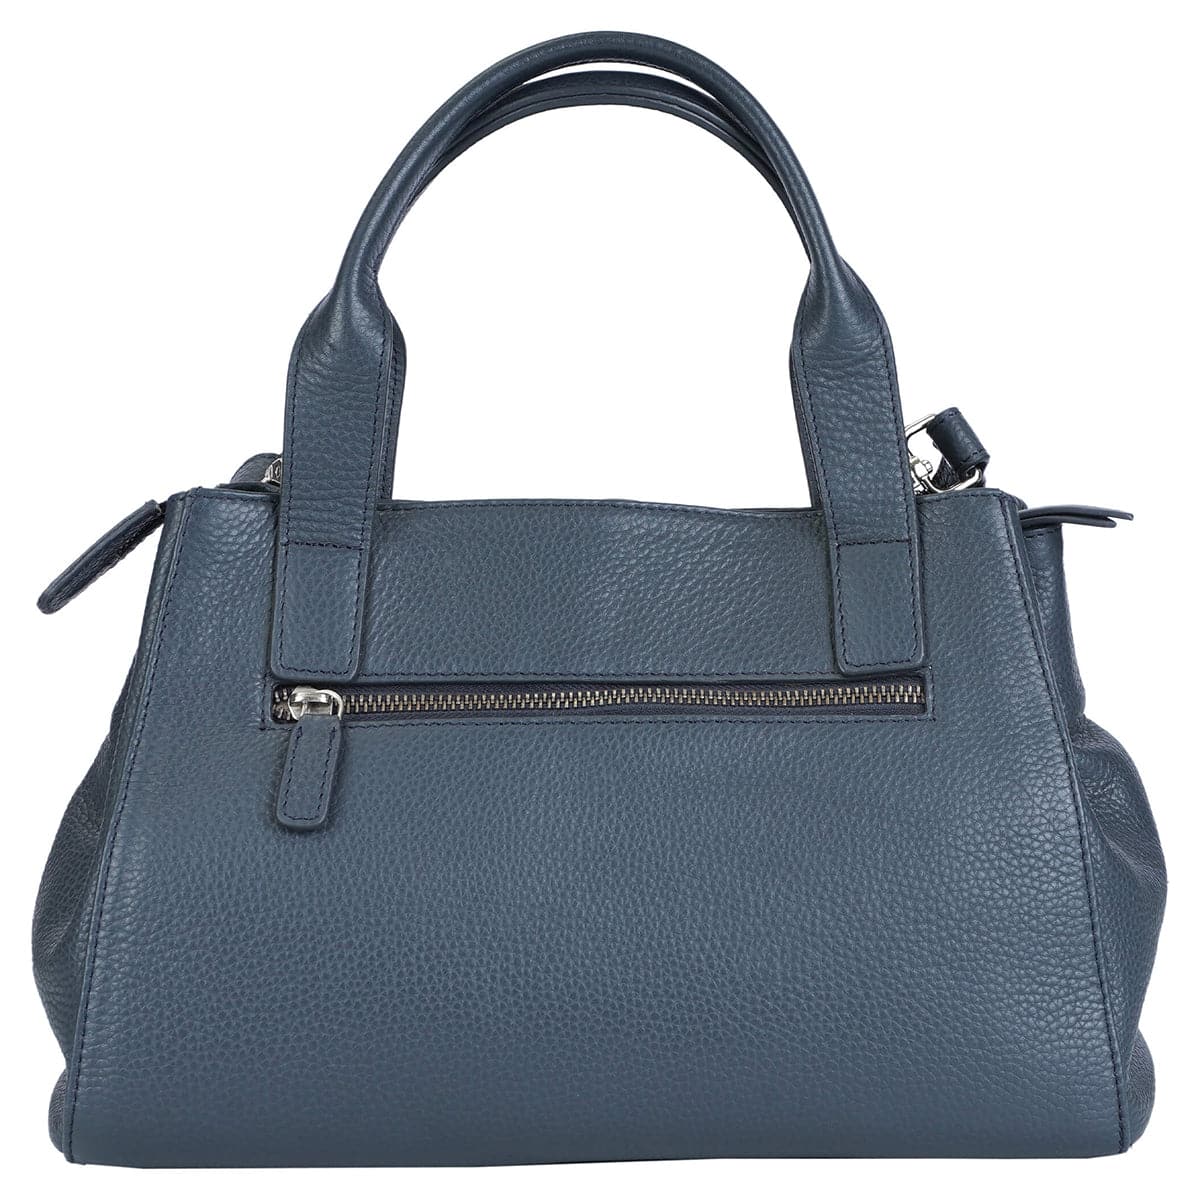 Mancini Pebbled Genevieve Top Zipper Handbag